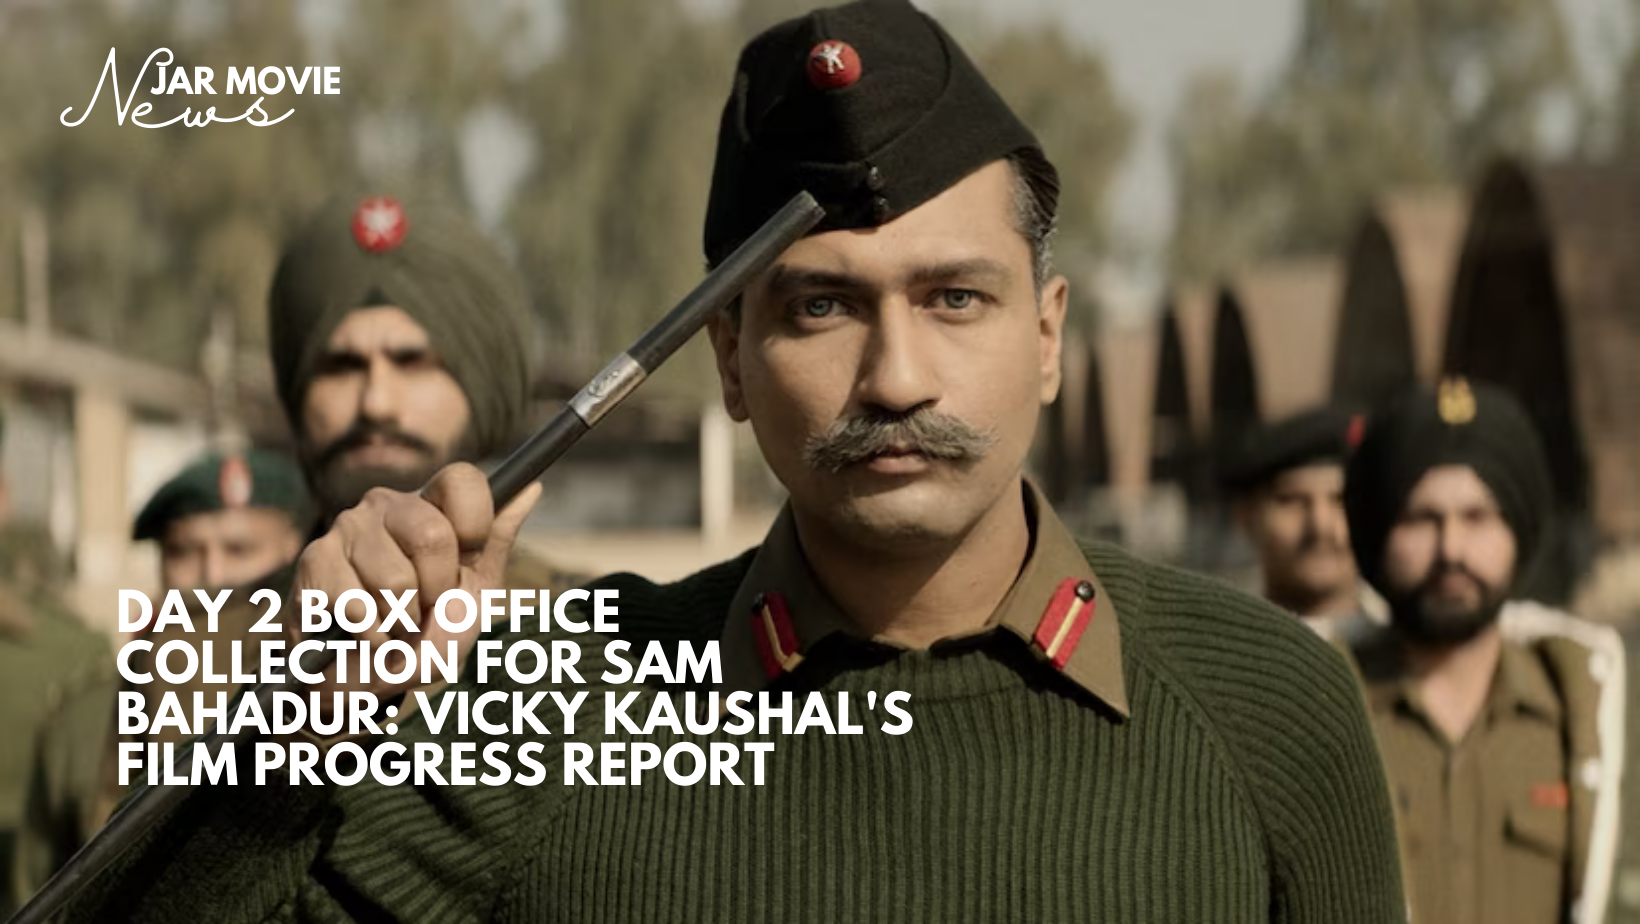 Day 2 Box Office Collection for Sam Bahadur: Vicky Kaushal's Film Progress Report